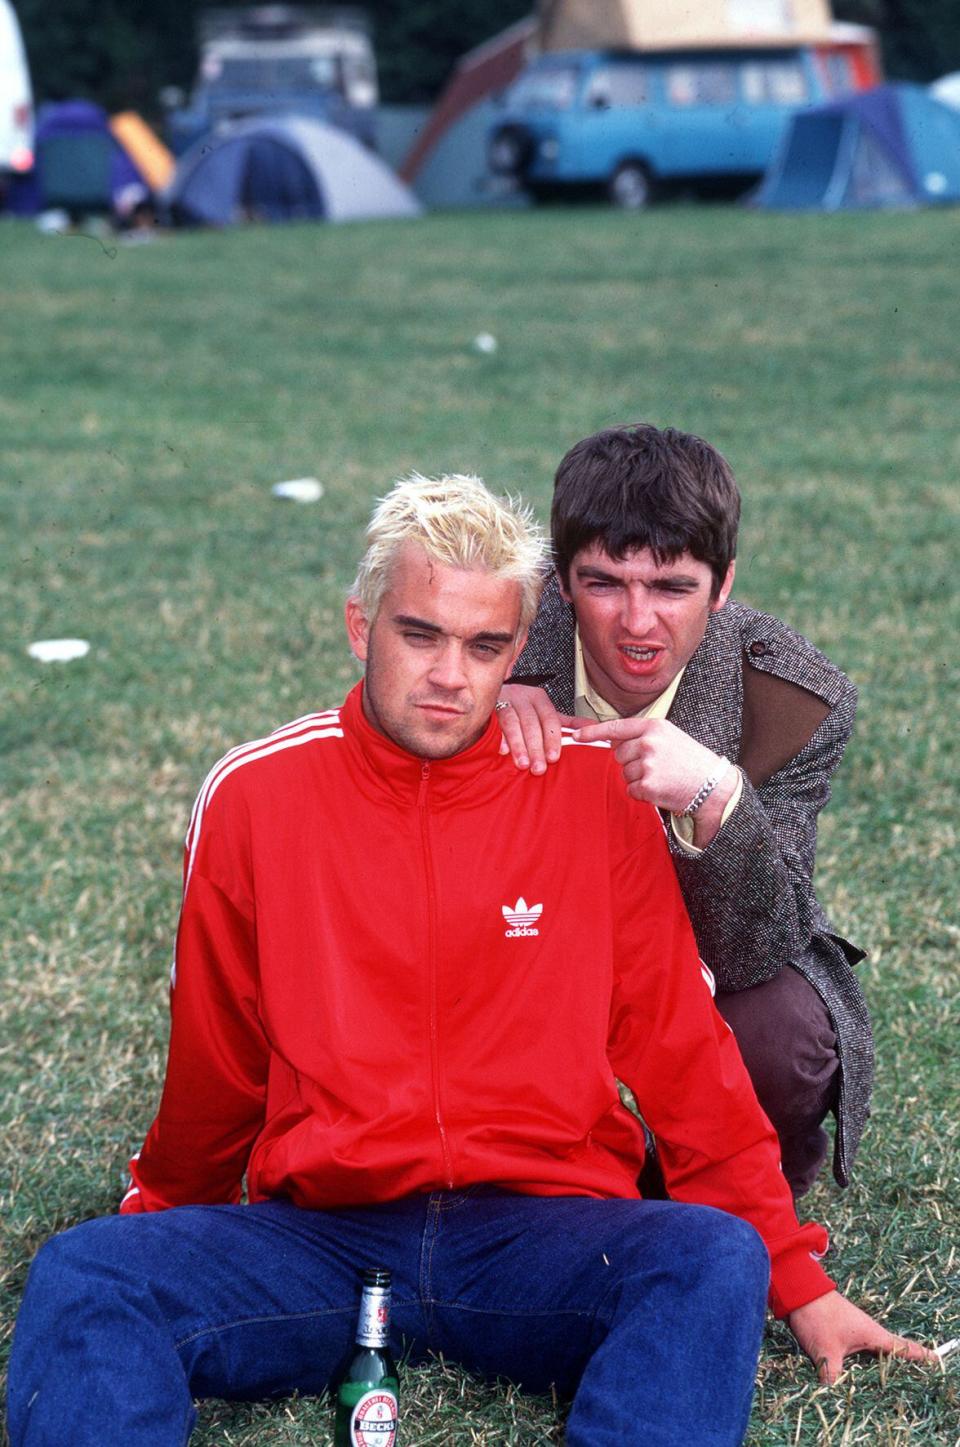 Robbie Williams and noel gallagher at Glastonbury 1995